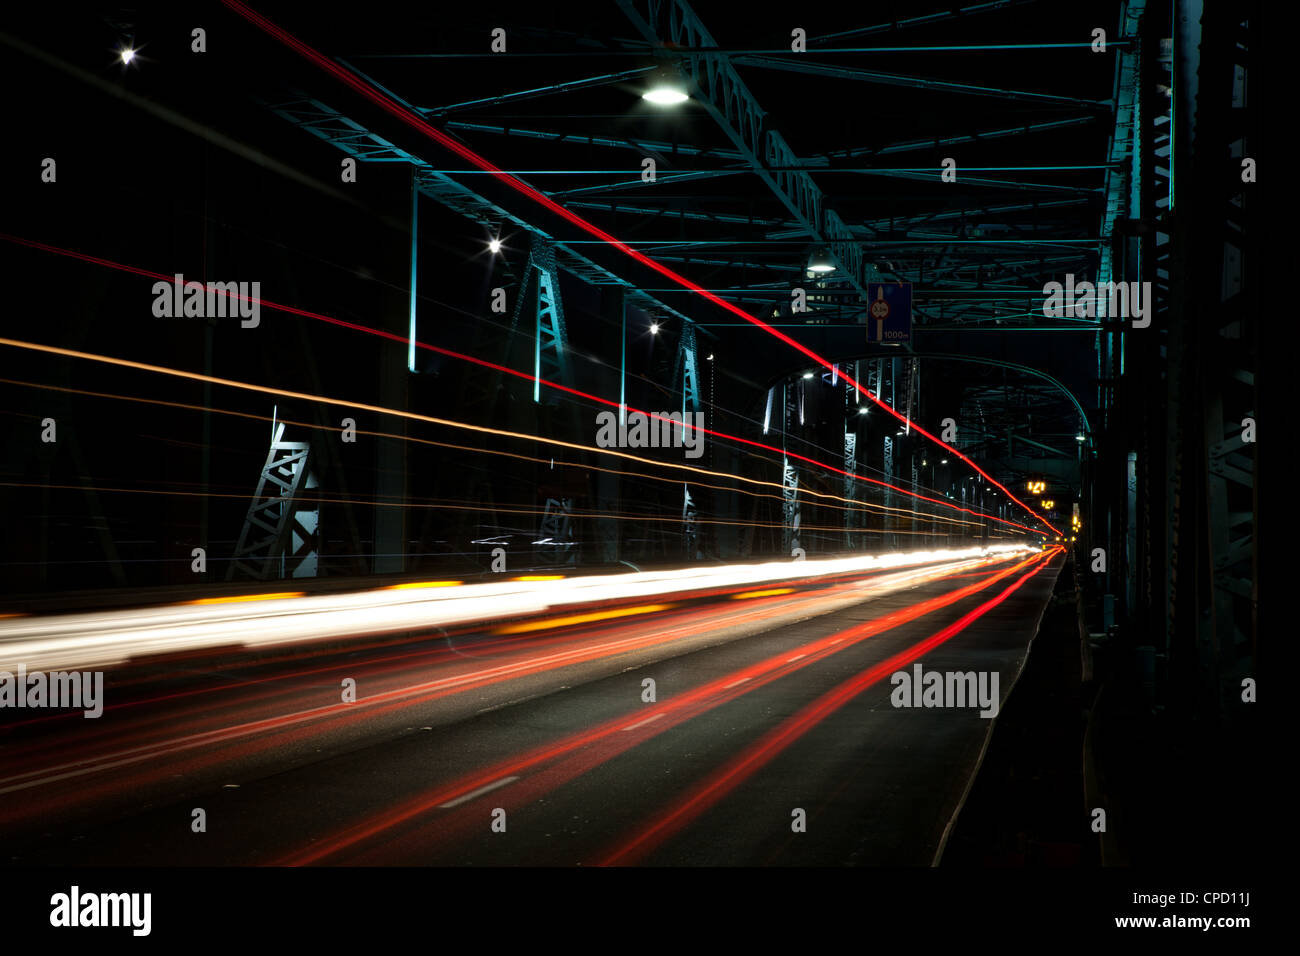 Streaming Lights at Night Stock Photo - Alamy